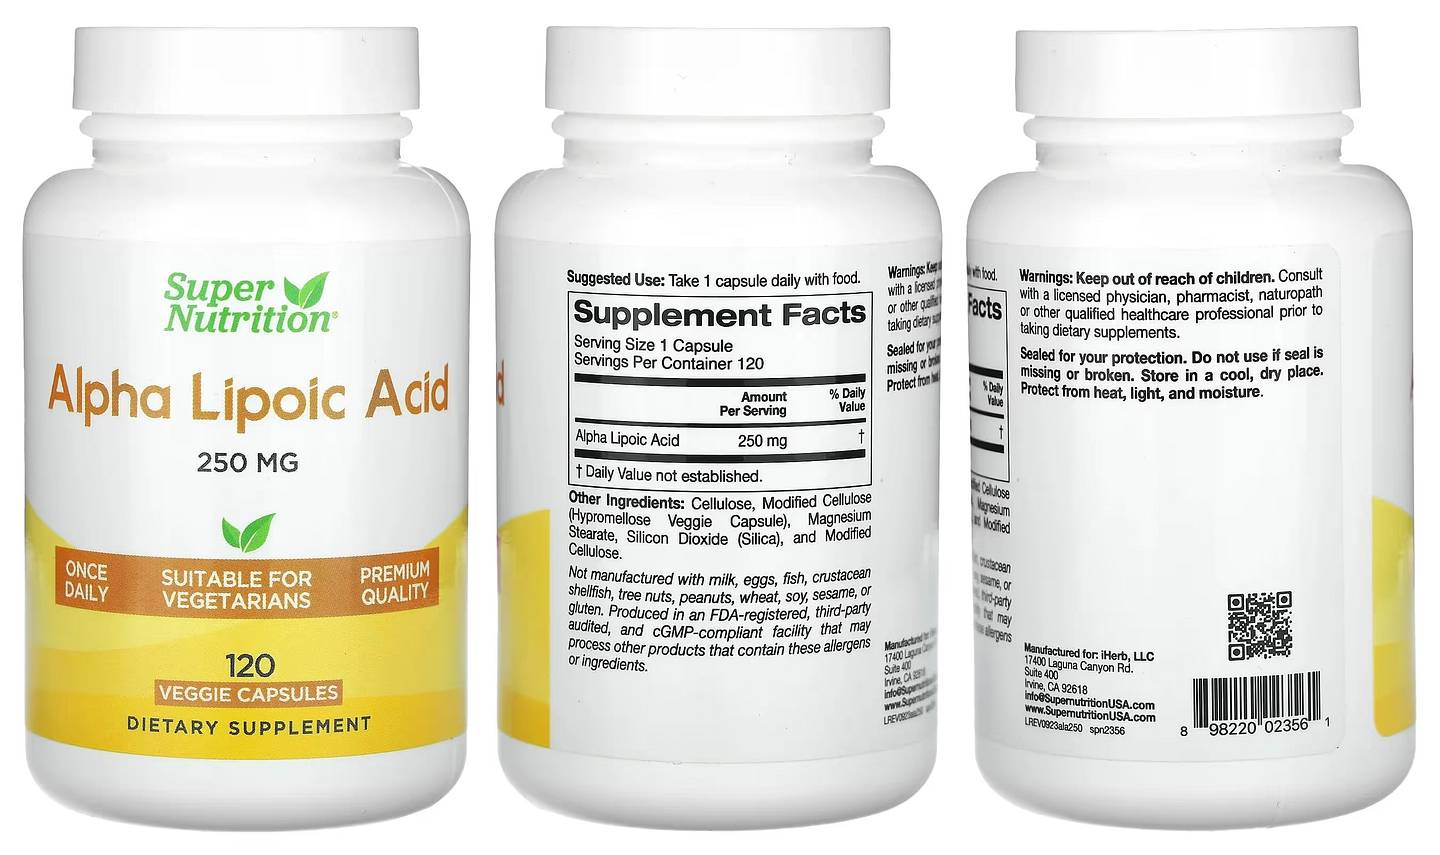 Super Nutrition, Alpha Lipoic Acid packaging